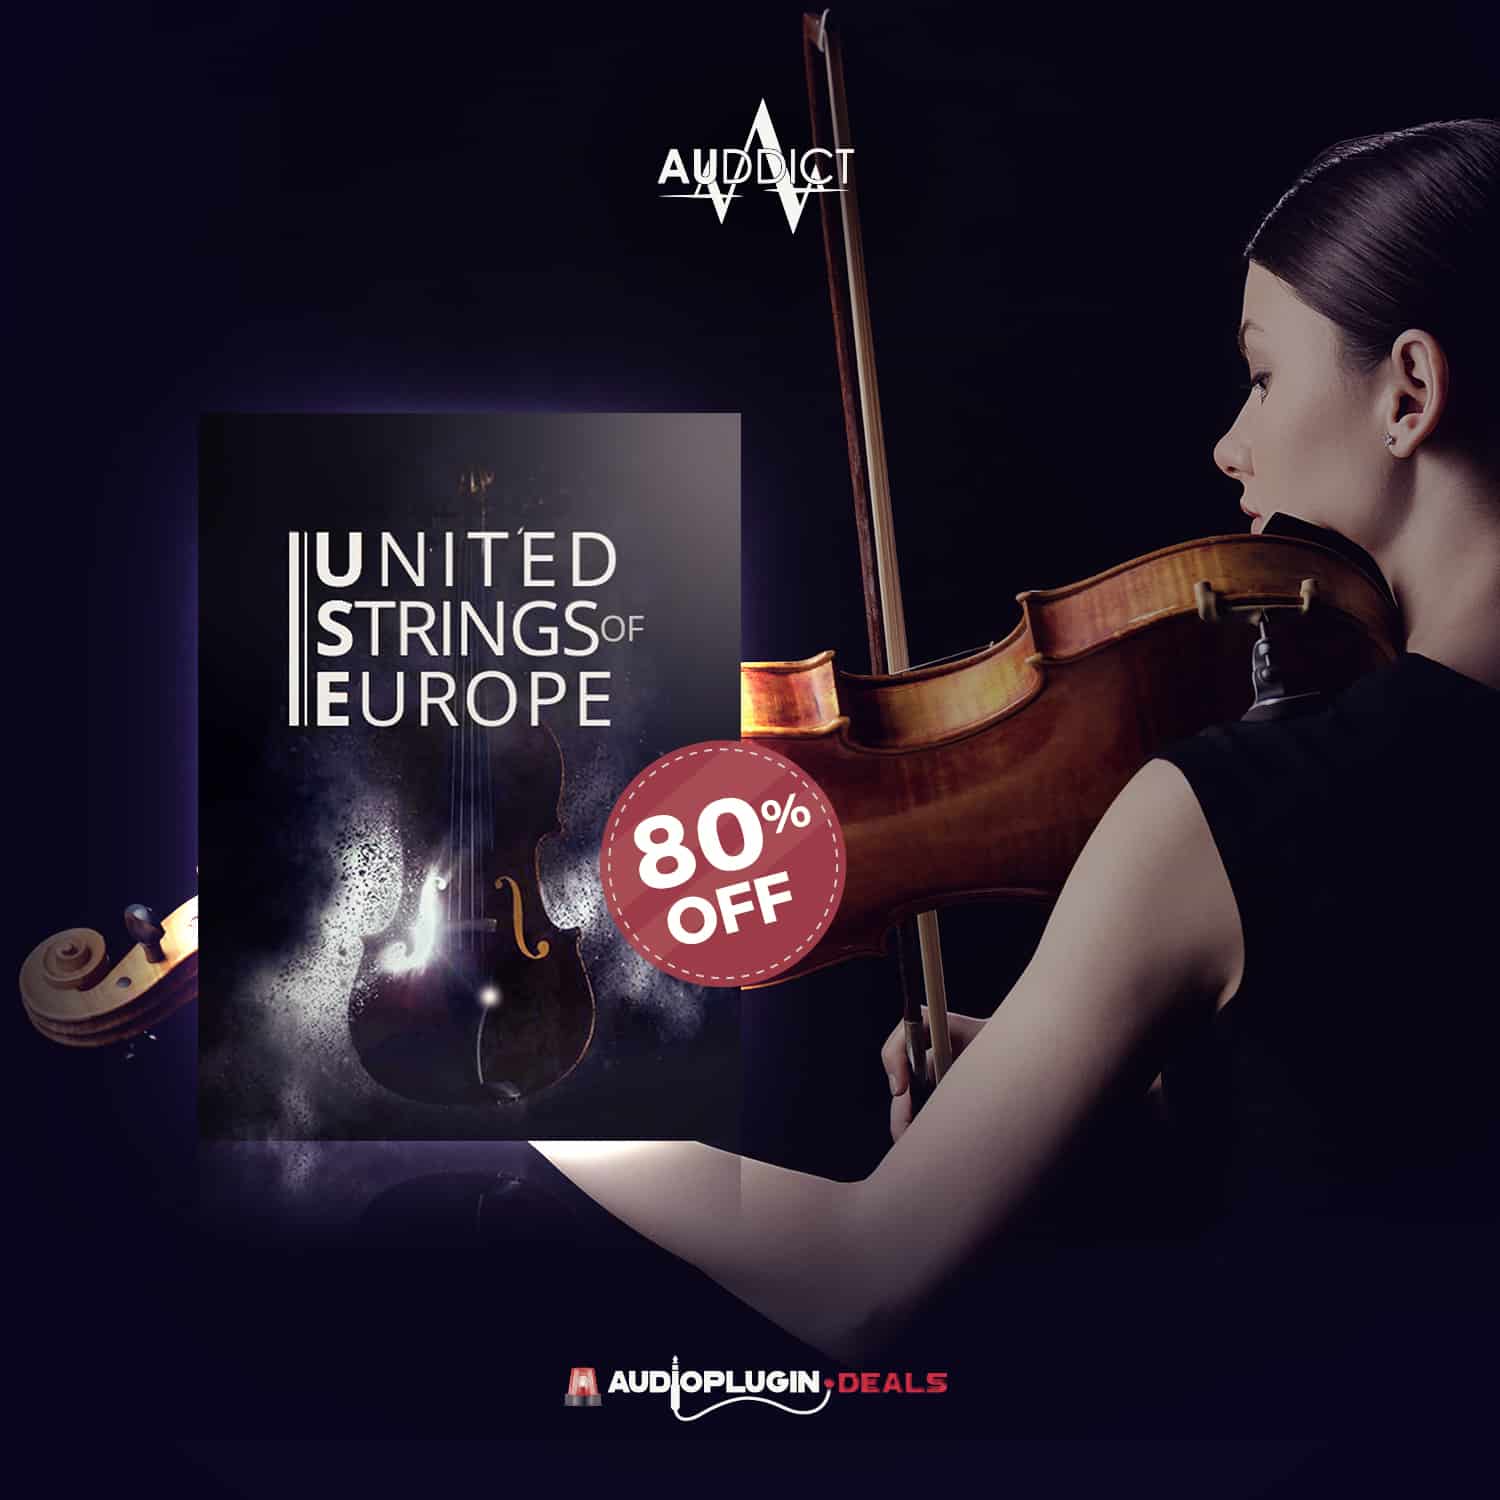 United Strings Of Europe Facebook ad 2